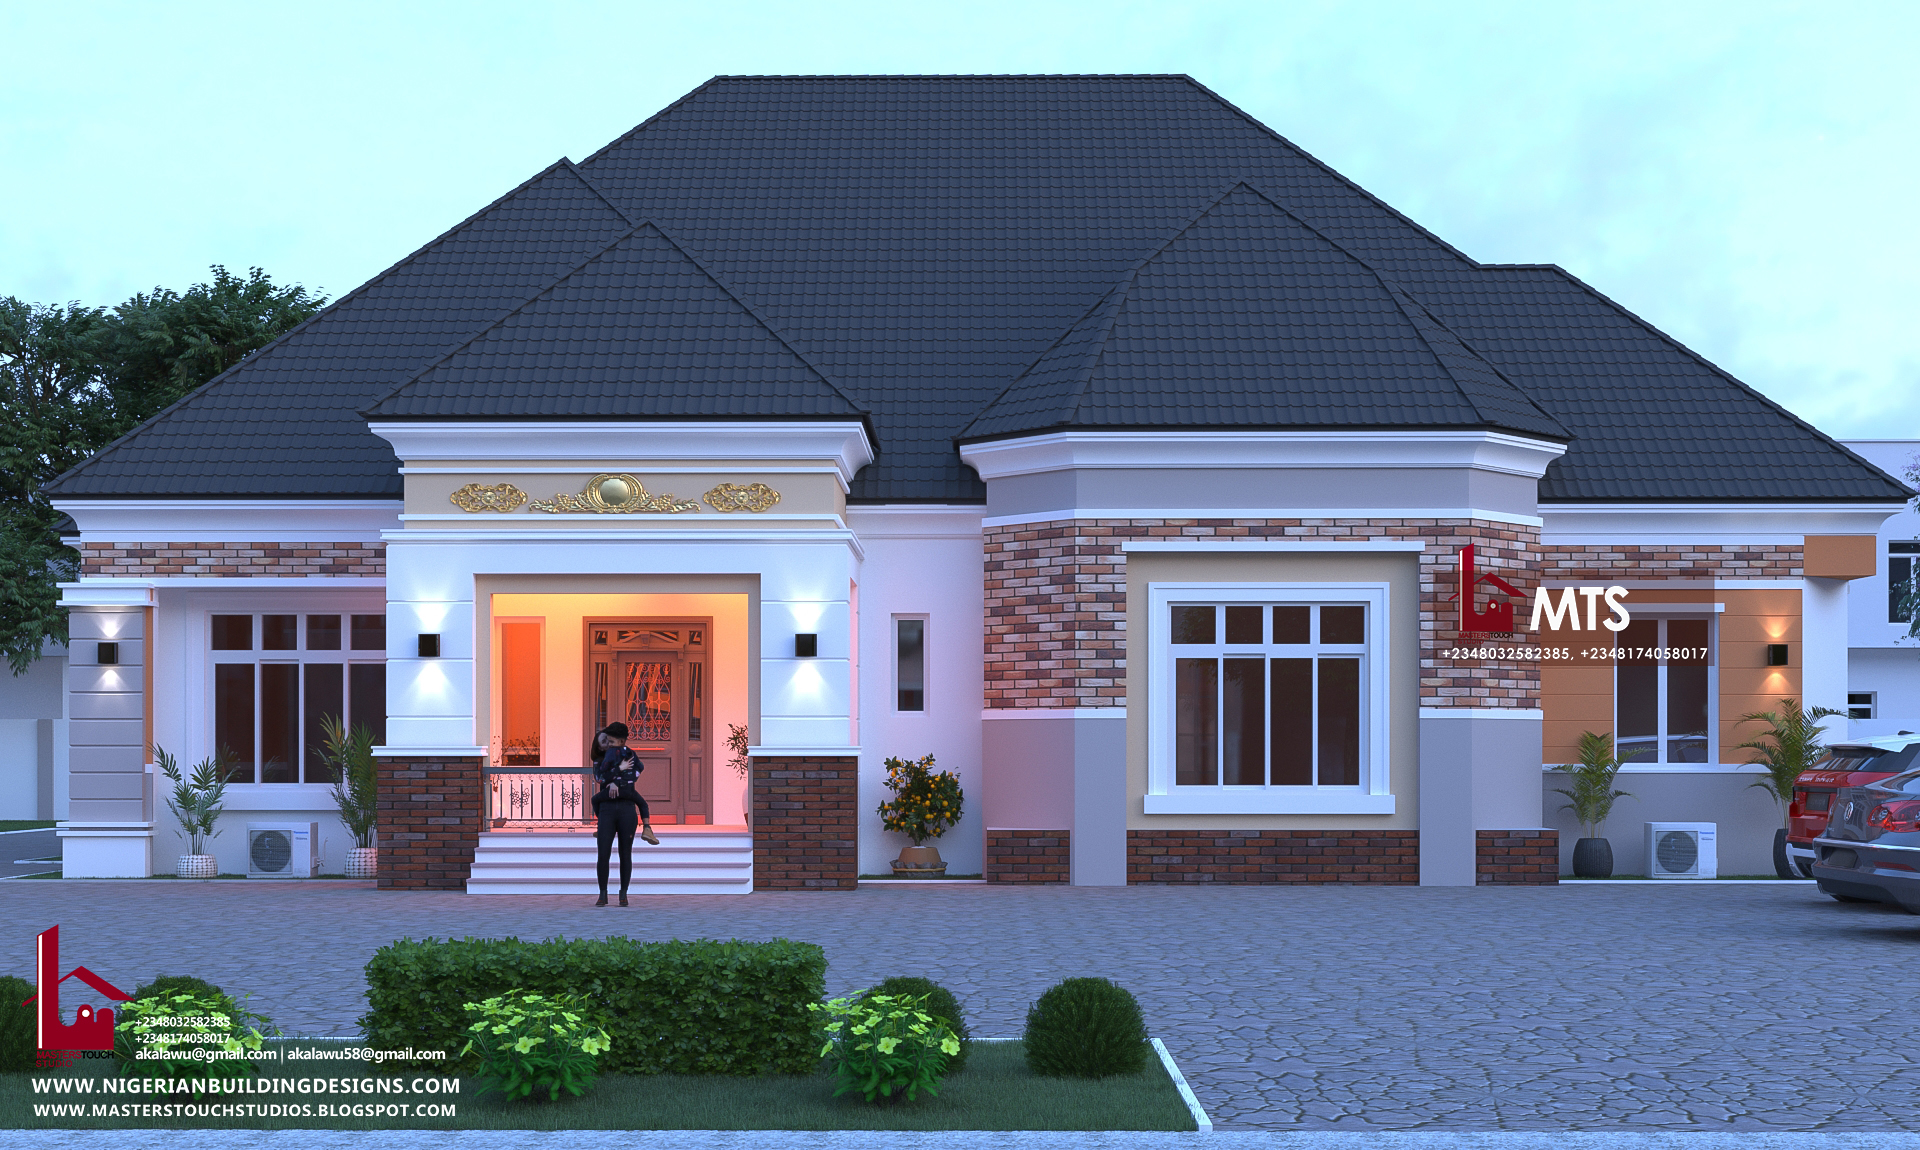 5 Bedroom Bungalow Rf 5001 Nigerian Building Designs